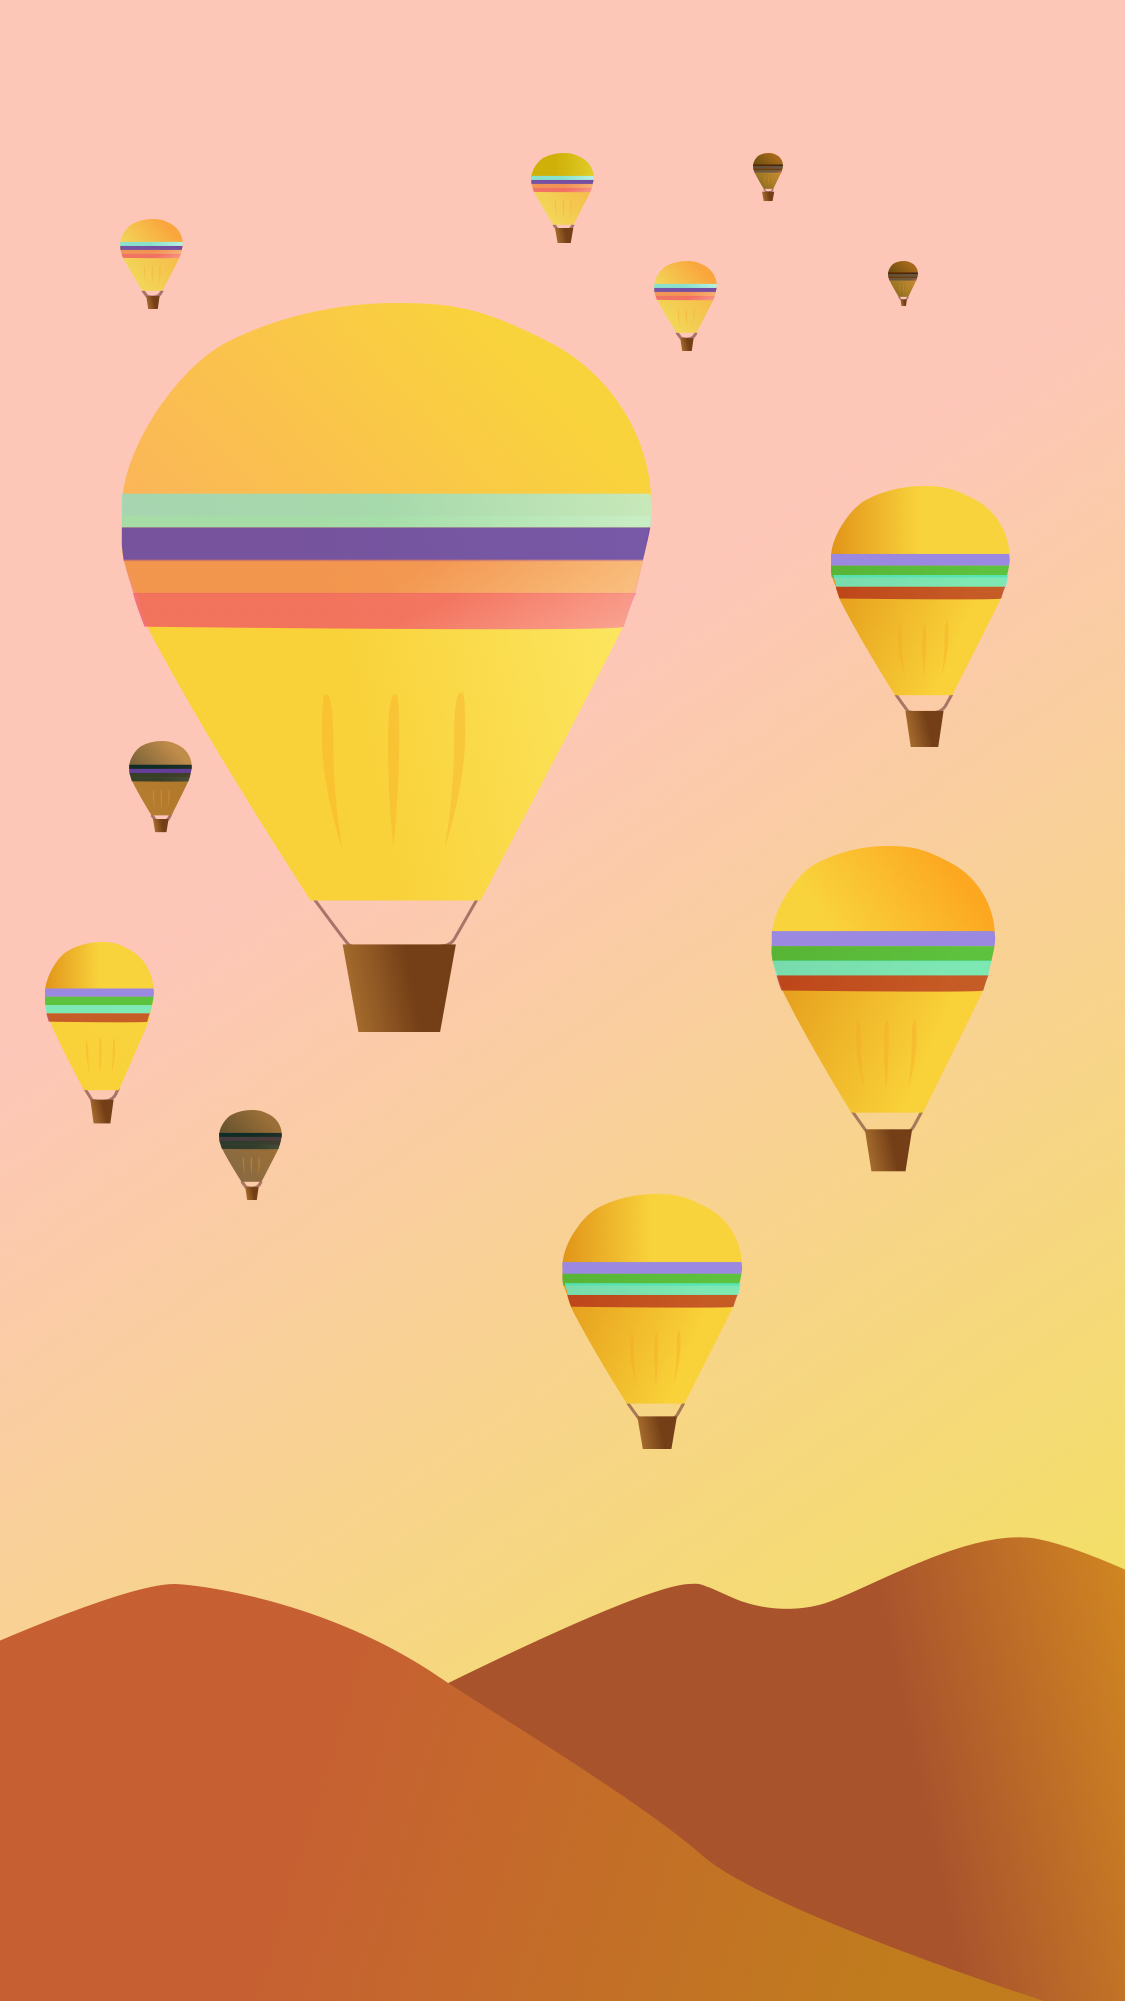 nfn-labls-hot-air-balloon-iphone-wallpaper